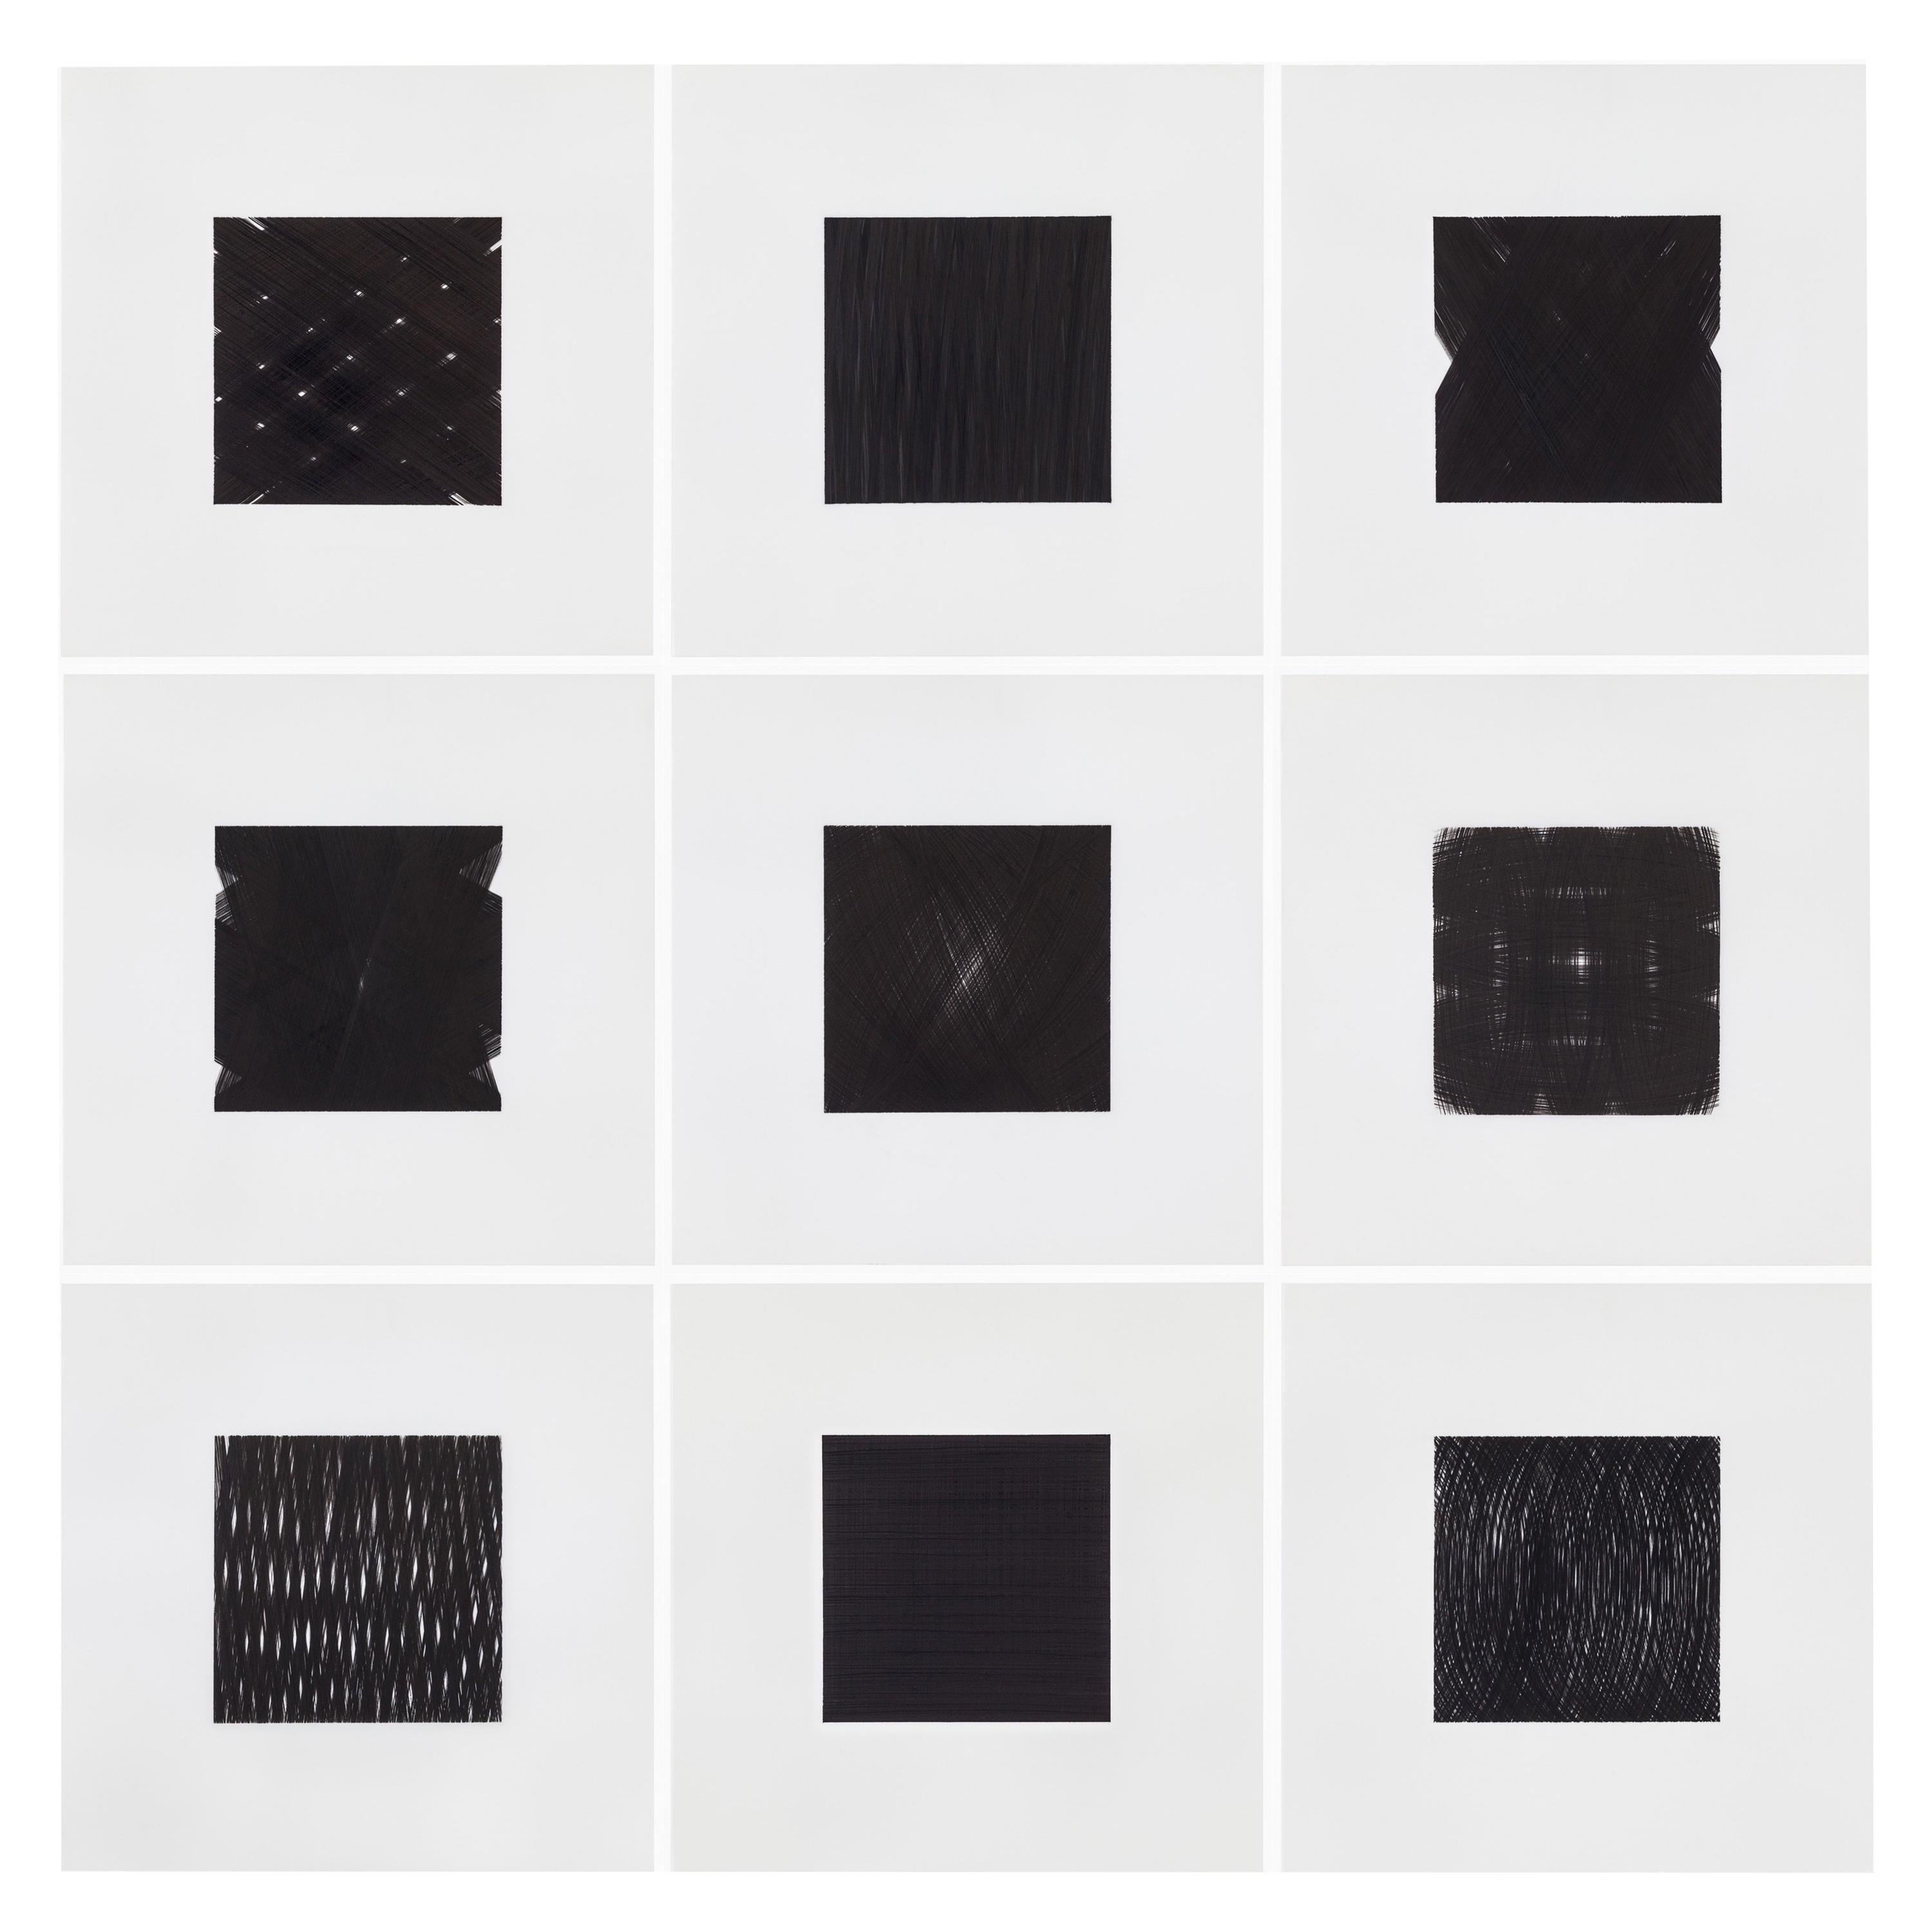 Patrick Carrara Black Ink on Mylar Drawings, Appearance Series, 2013 - 2015